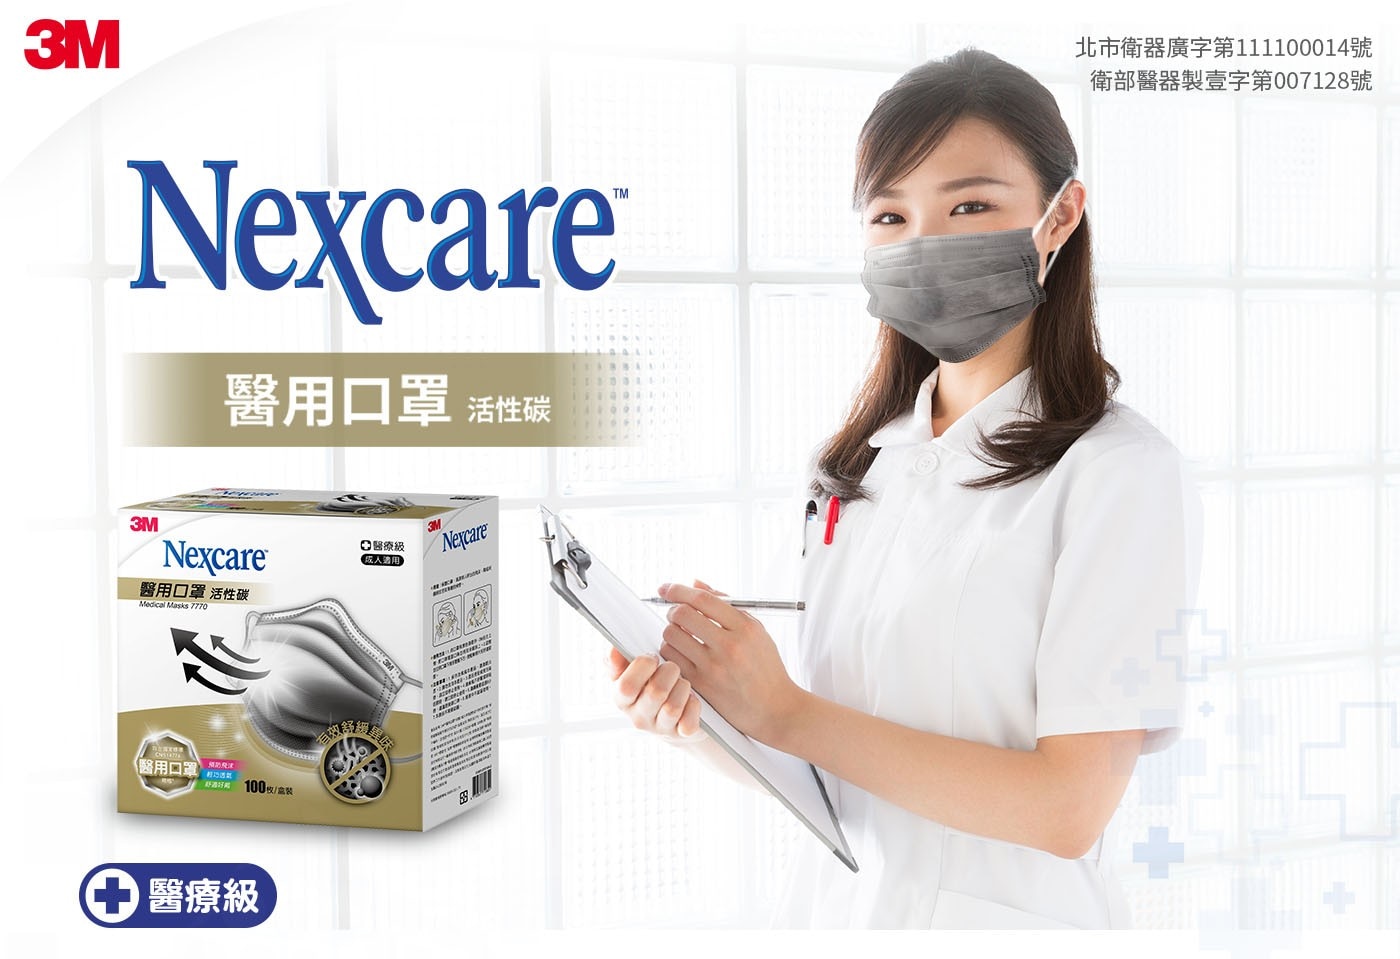 3M Nexcare 醫用活性碳口罩預防飛沫感染，細菌過濾效率高達99%，符合醫用口罩標準，呼吸順暢不悶熱。